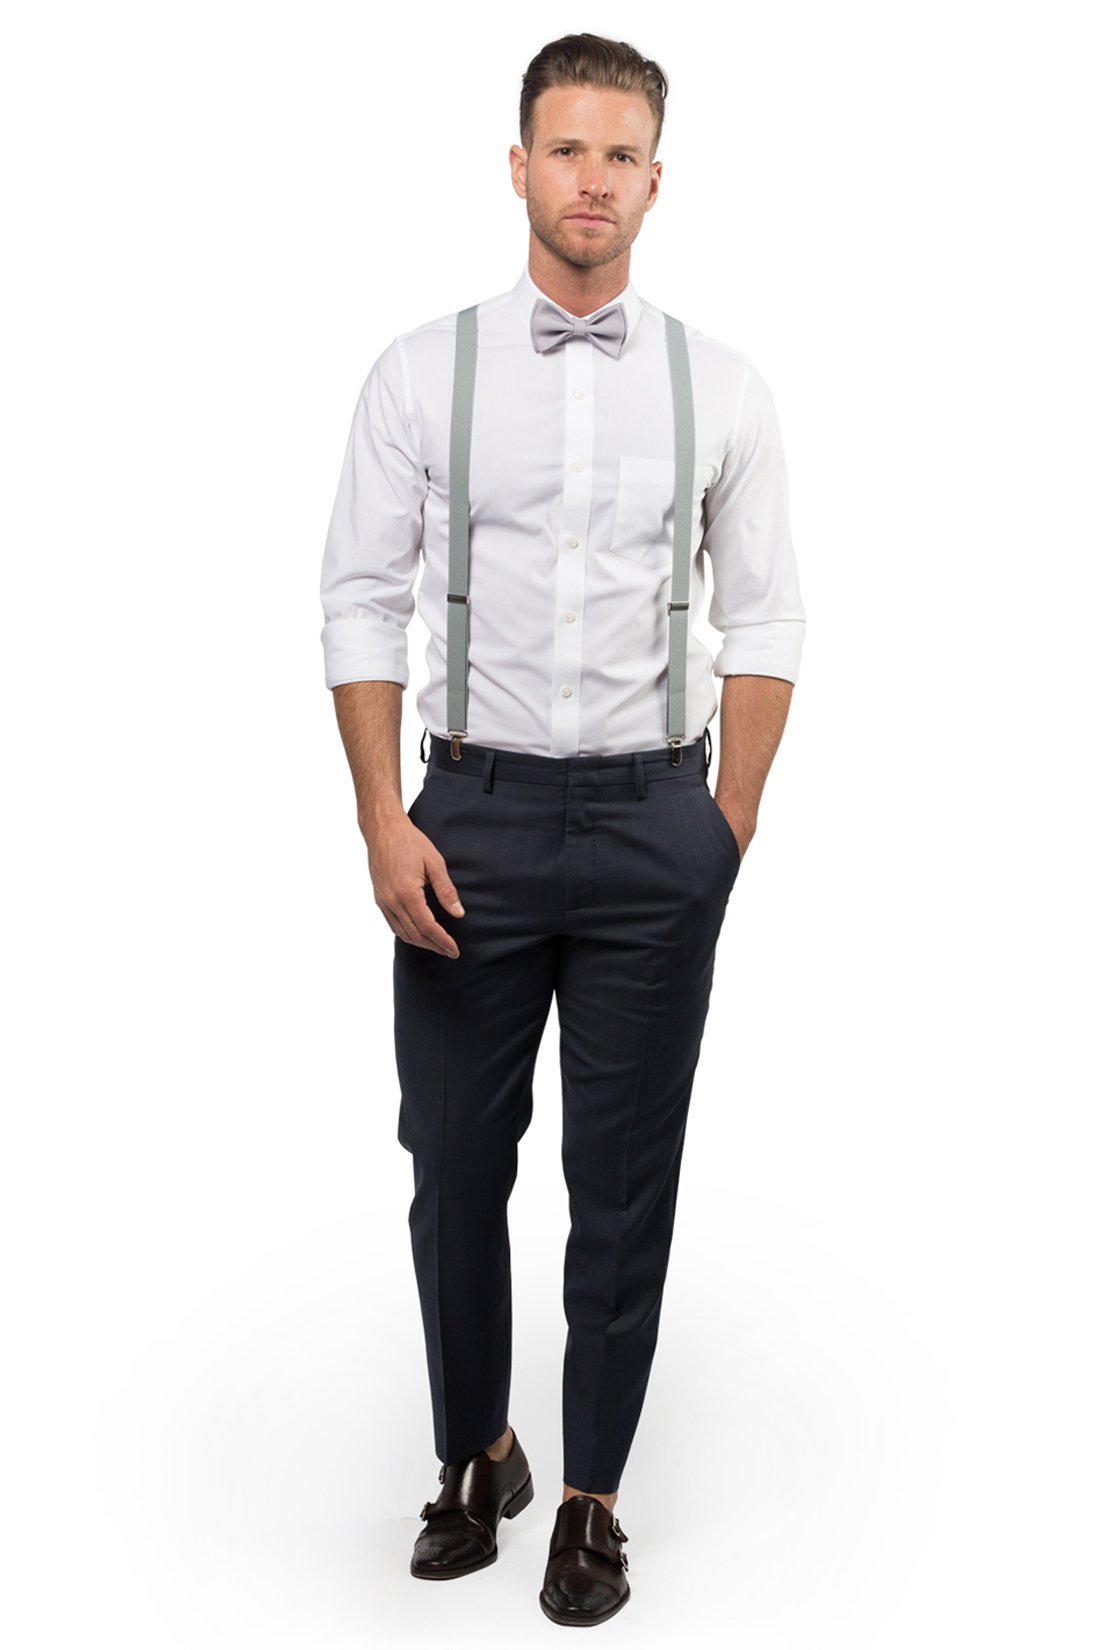 Light Gray Suspenders & Light Gray Bow Tie